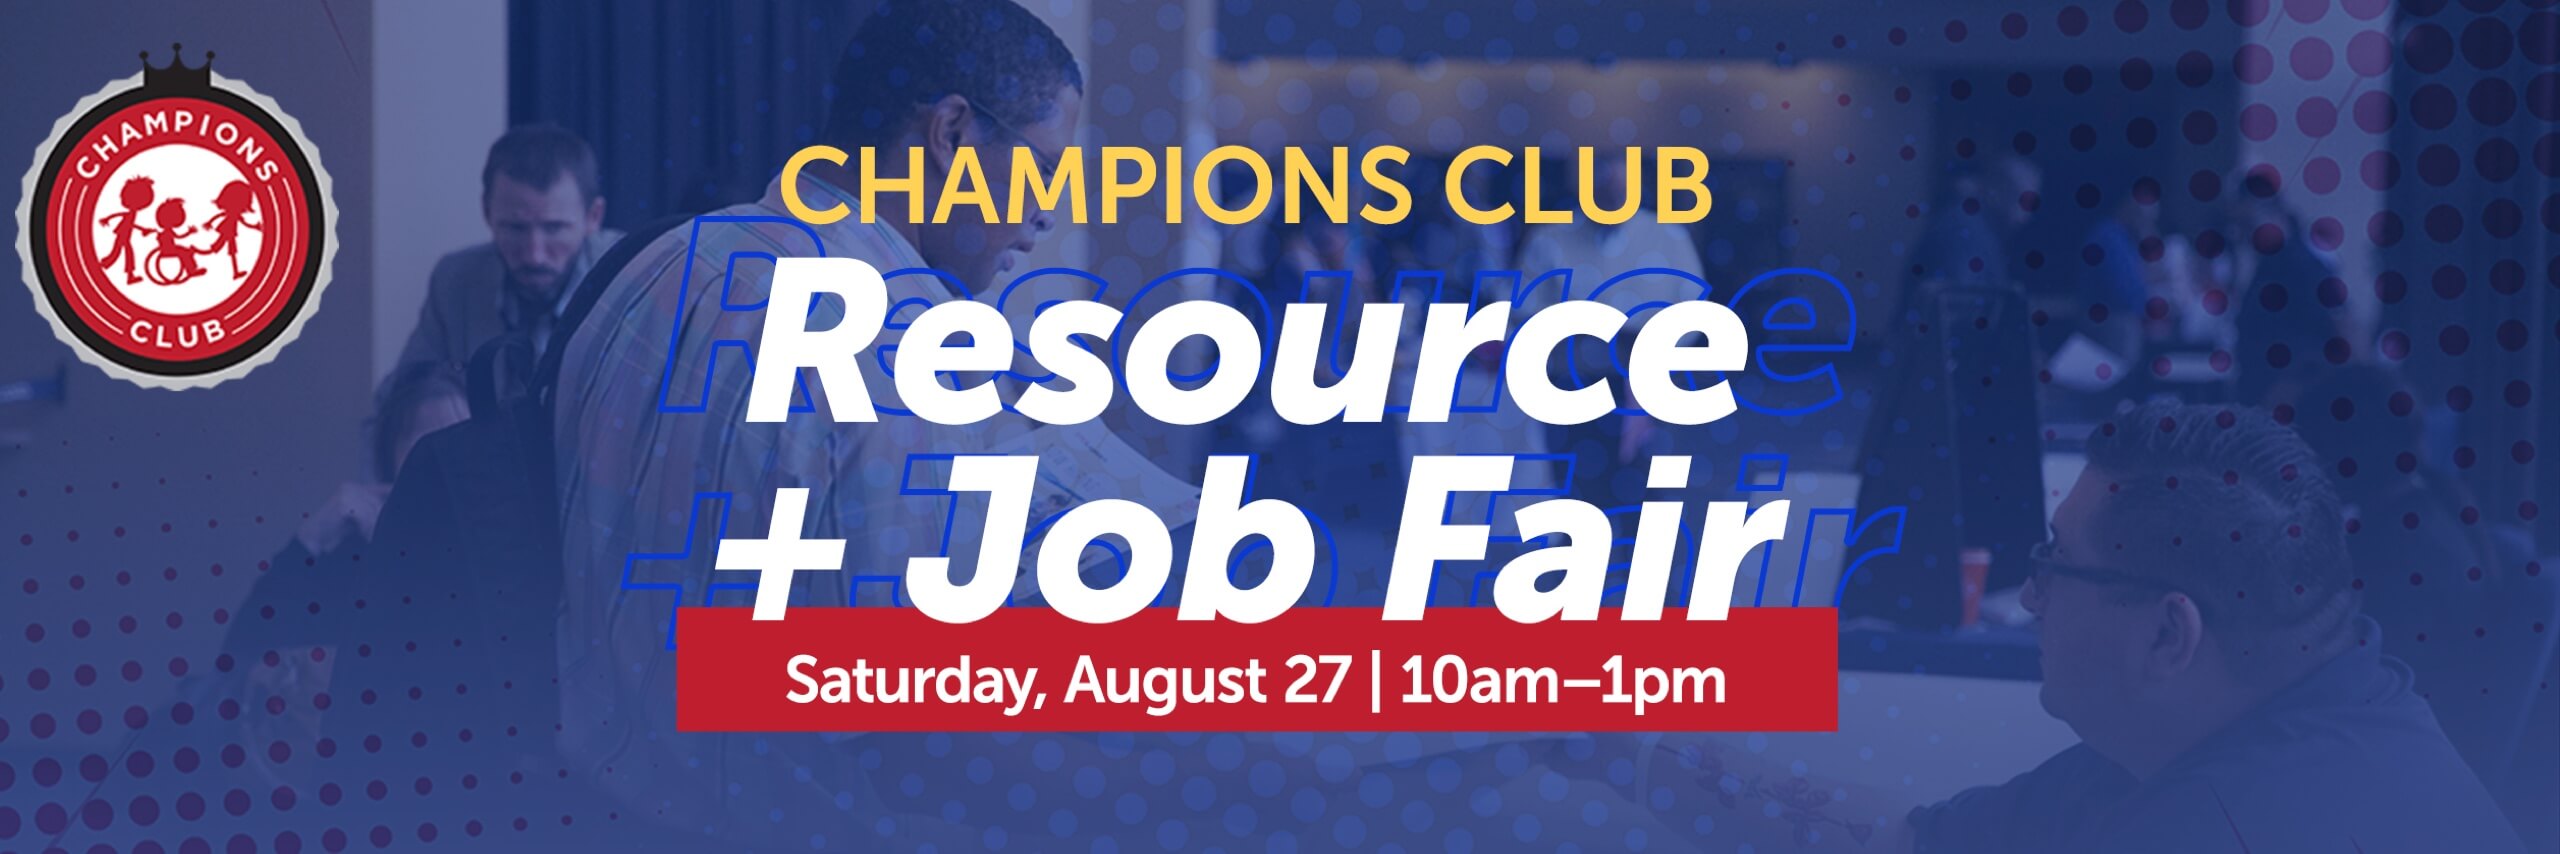 Champions Club Resource and Job Fair Saturday, August 27th 10am-1pm at Lakewood Church